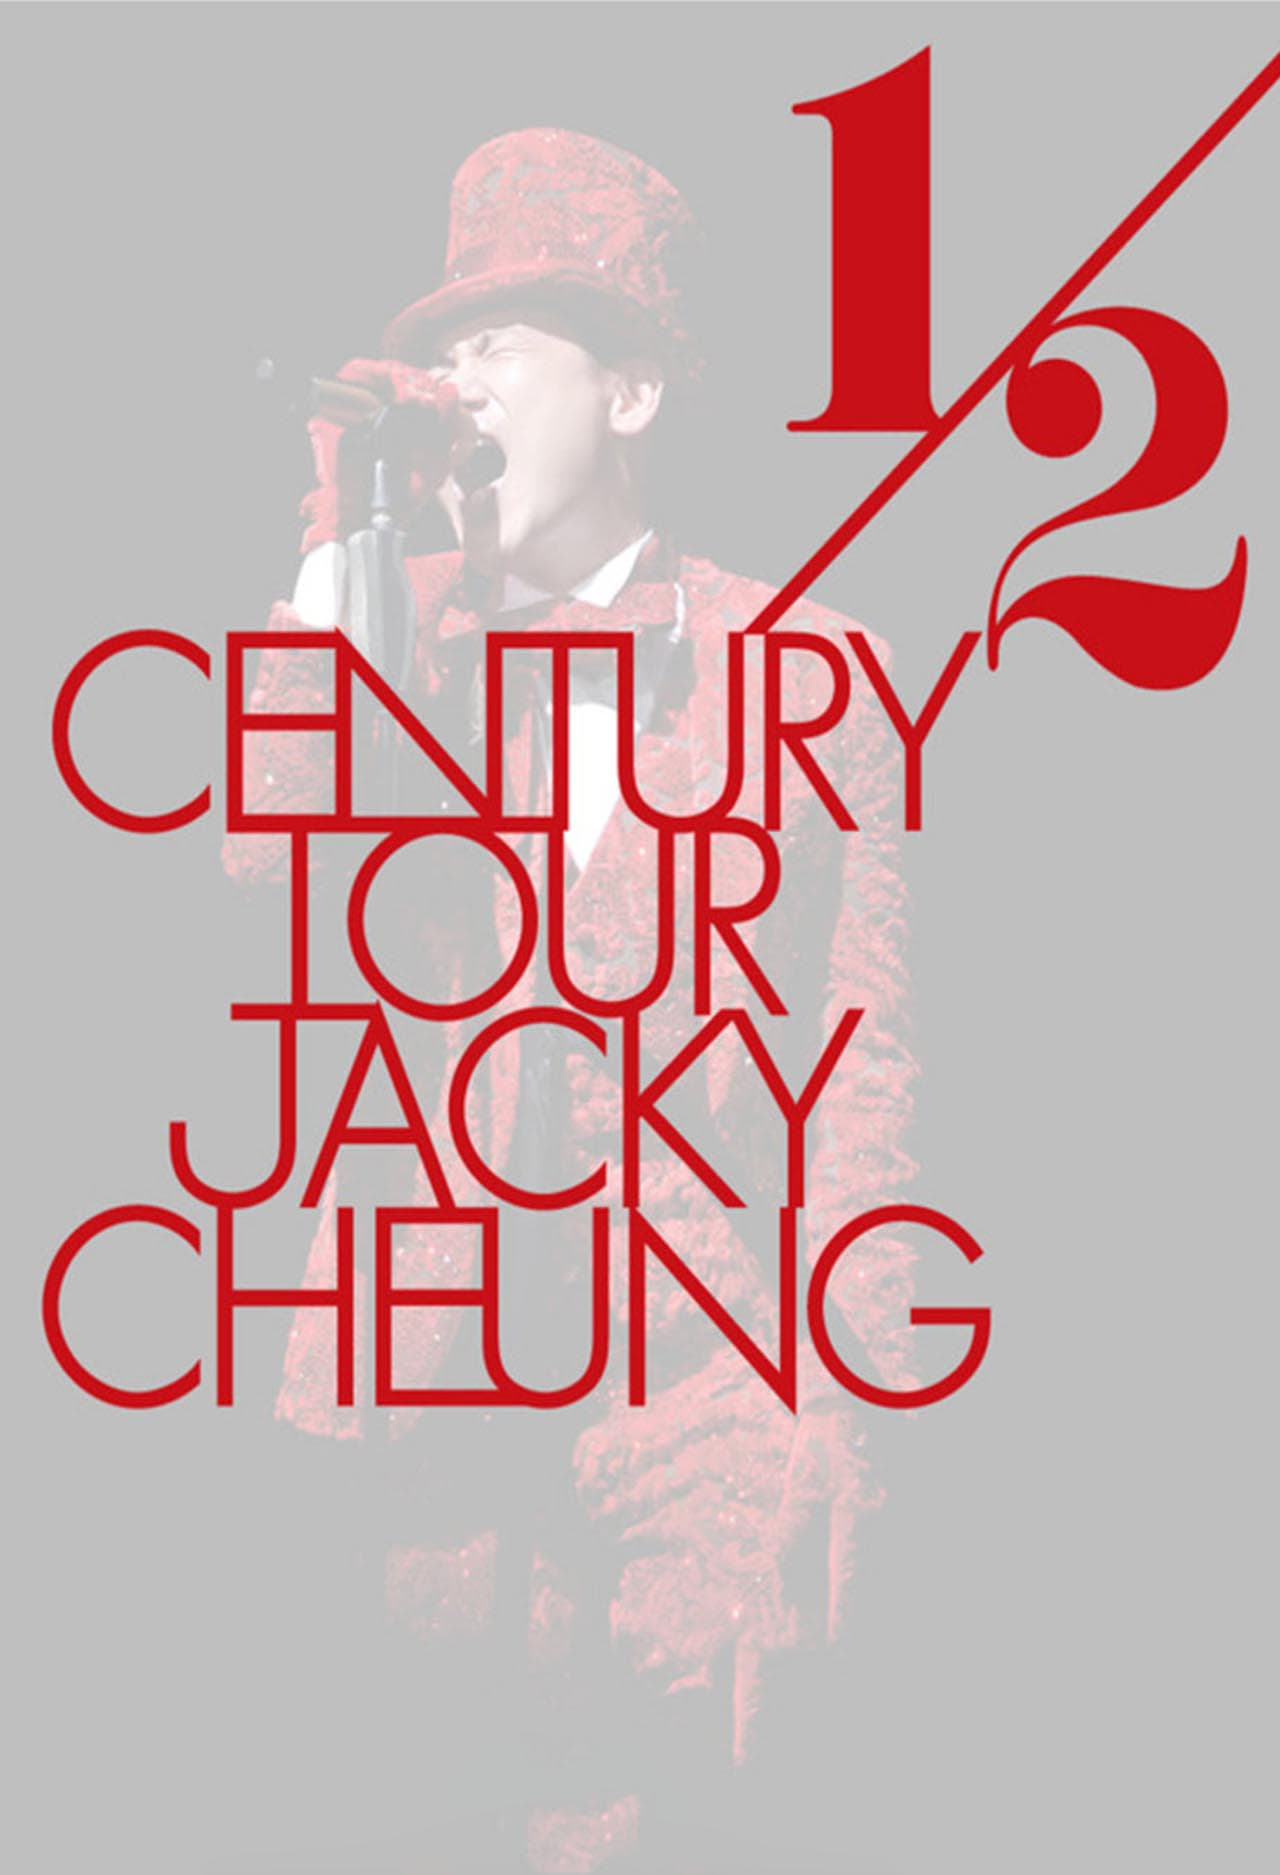 Jacky Cheung Half Century Tour